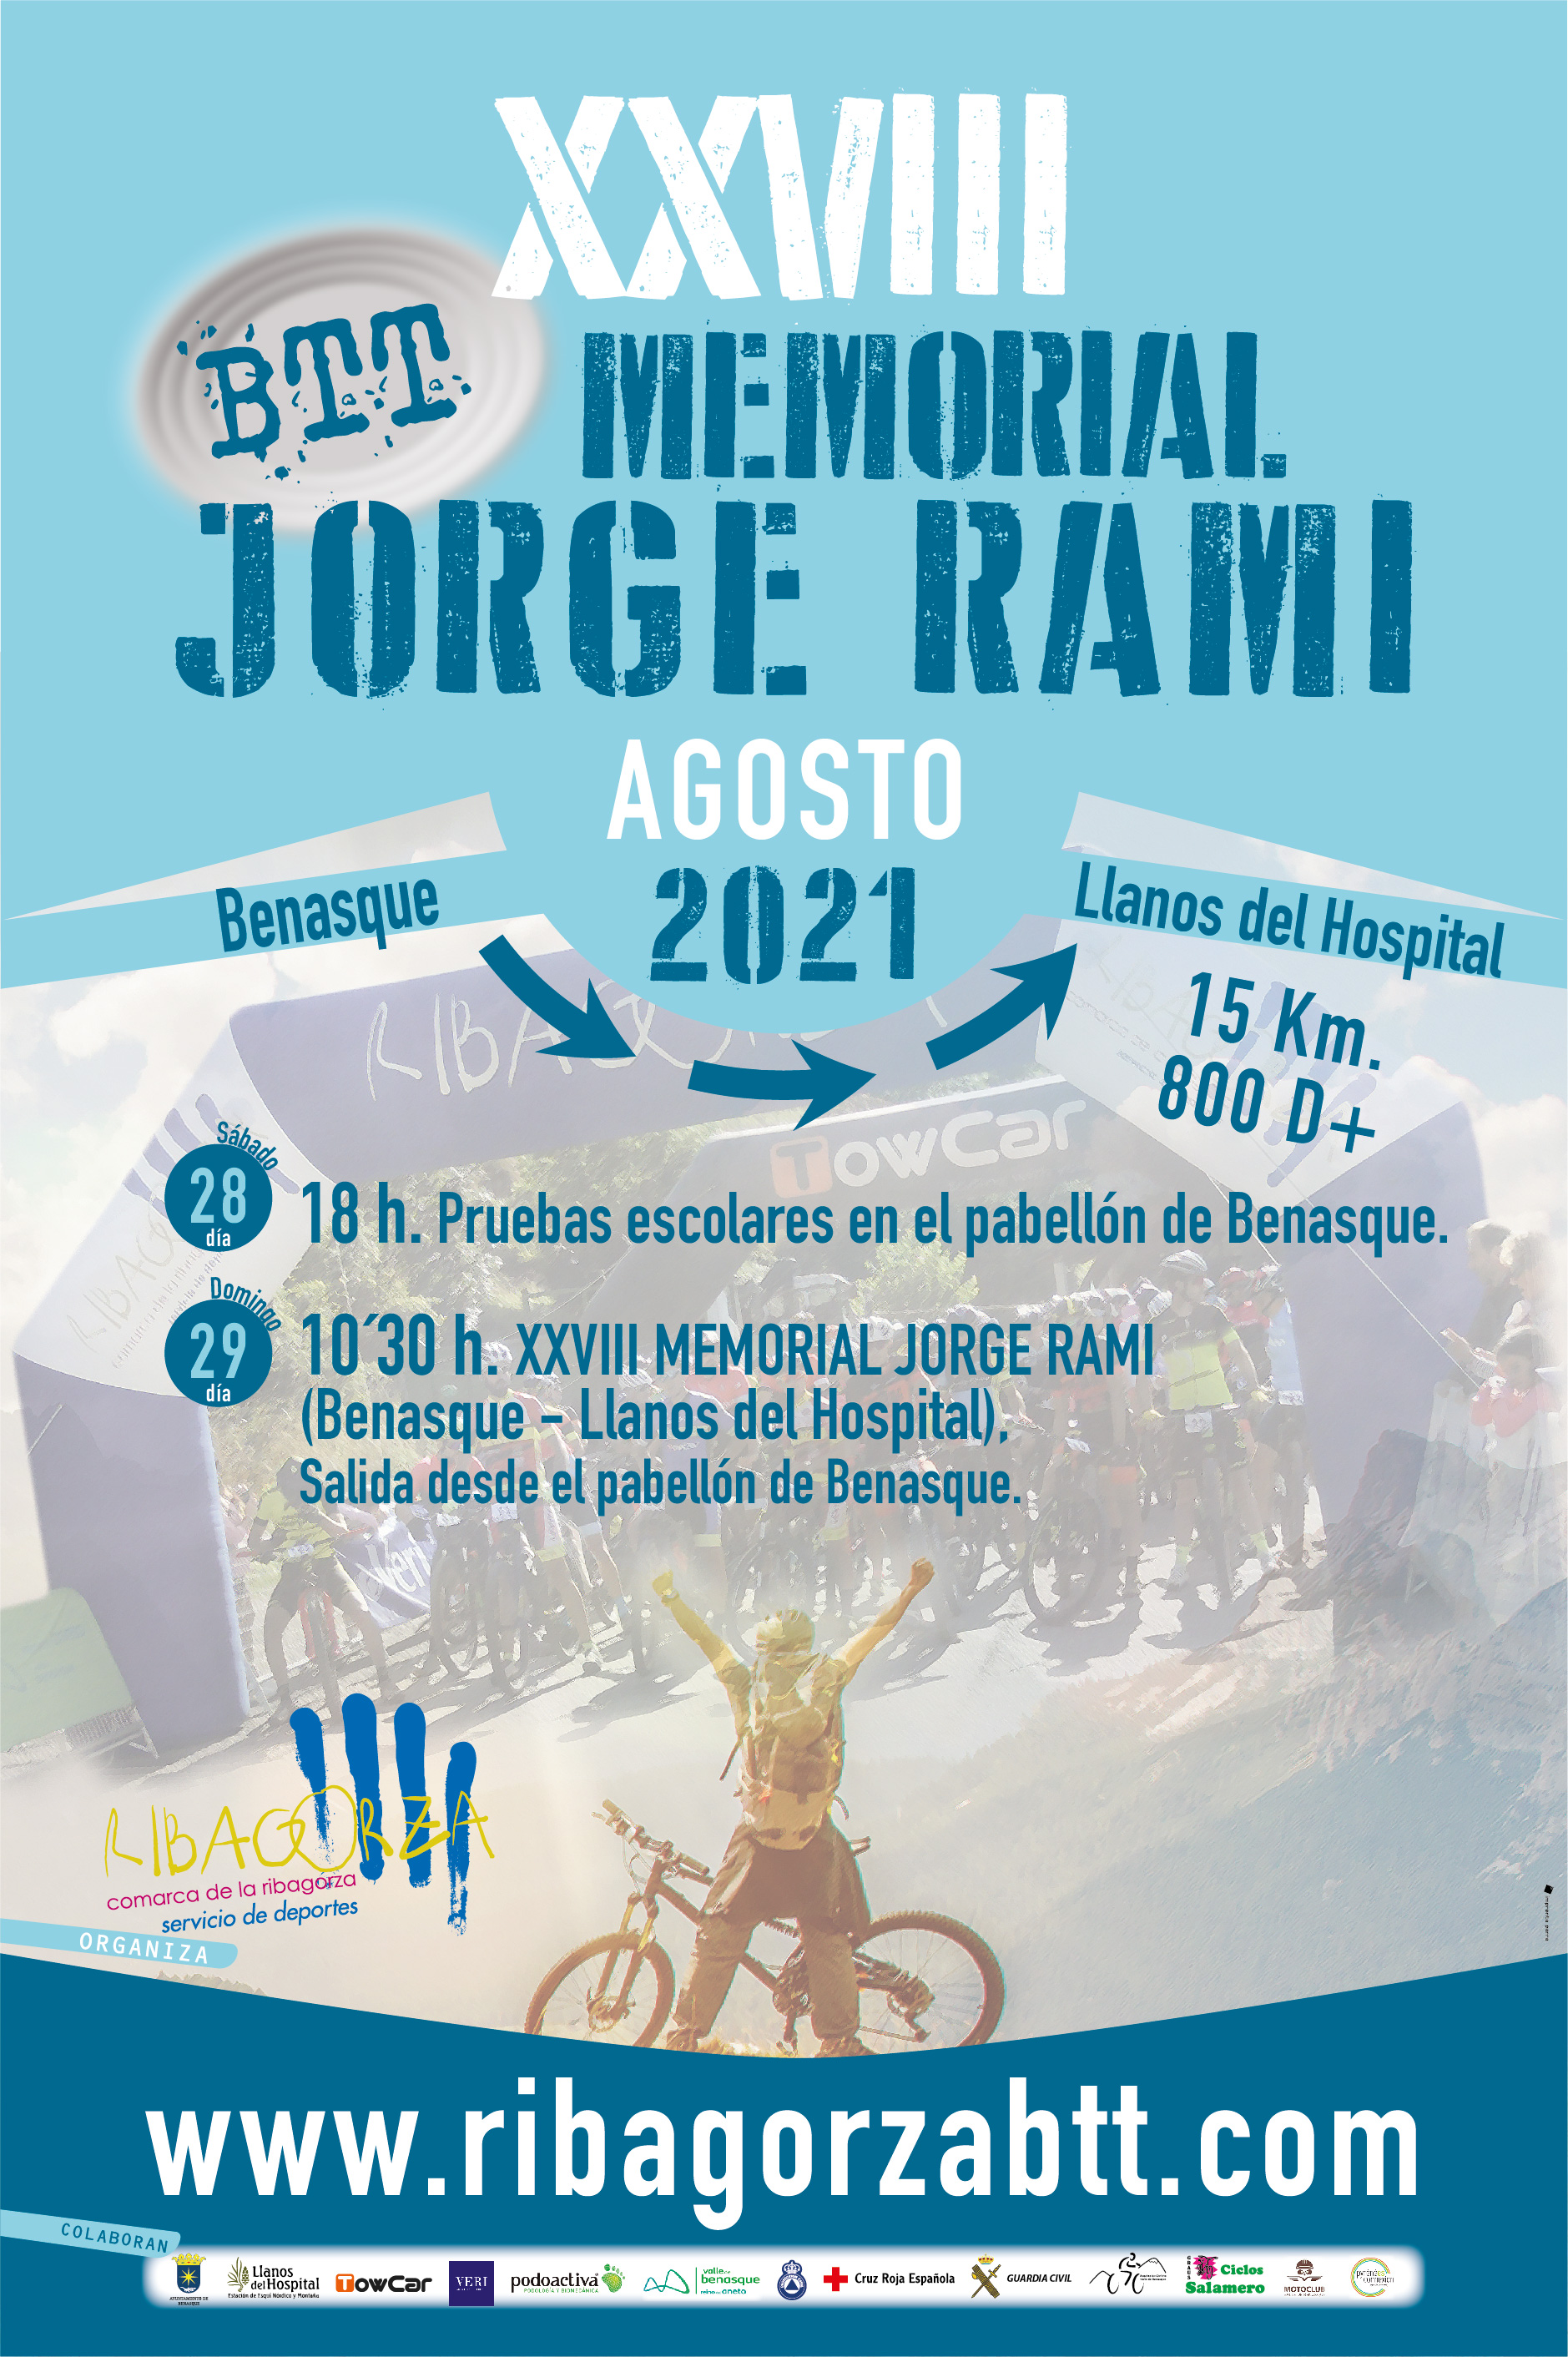 XXVIII MEMORIAL JORGE RAMI